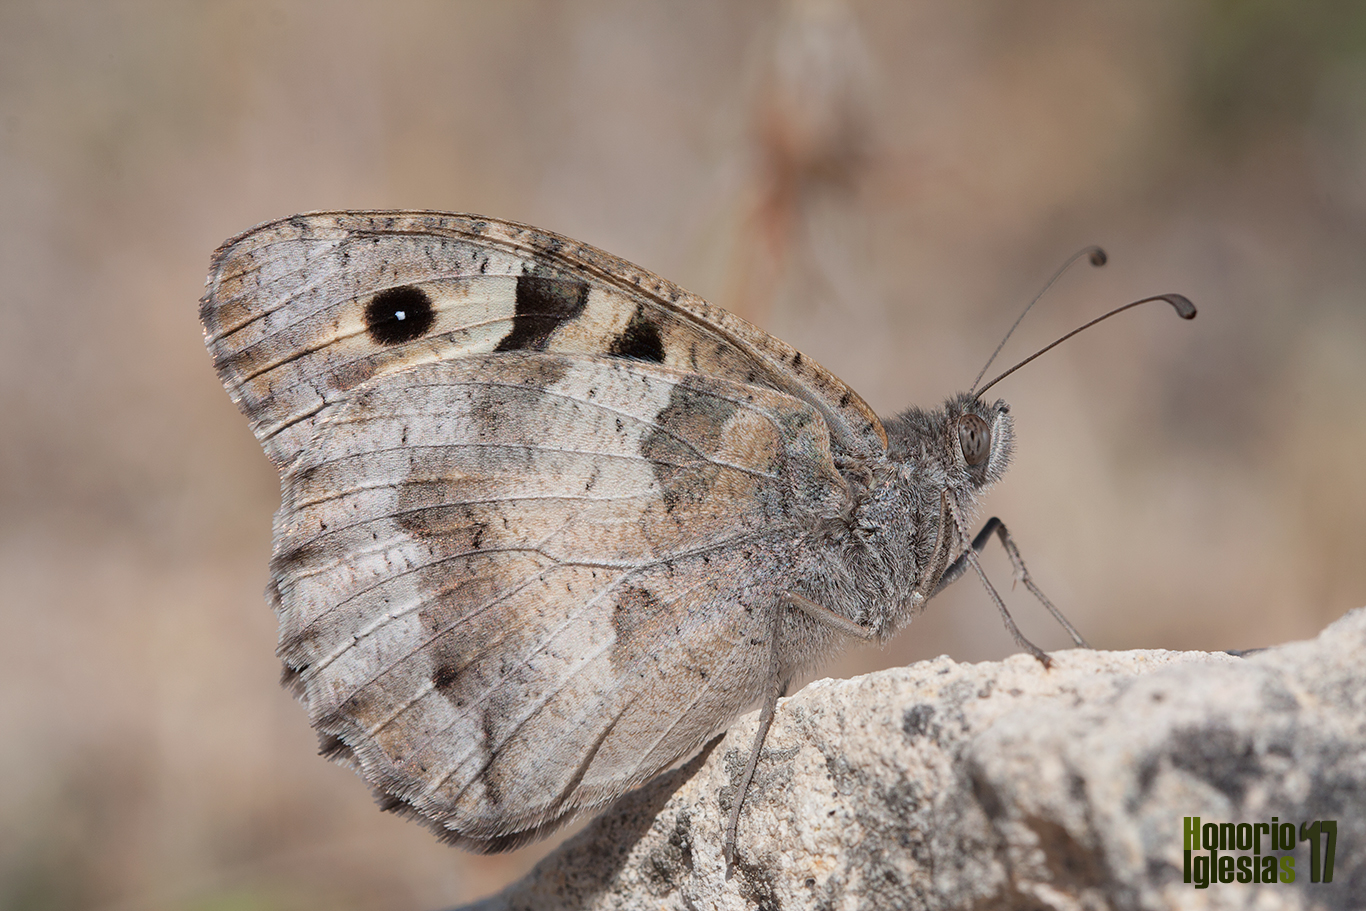 Macho de mariposa briseis o banda oblicua (Chazara briseis), mostrando su anverso alar.